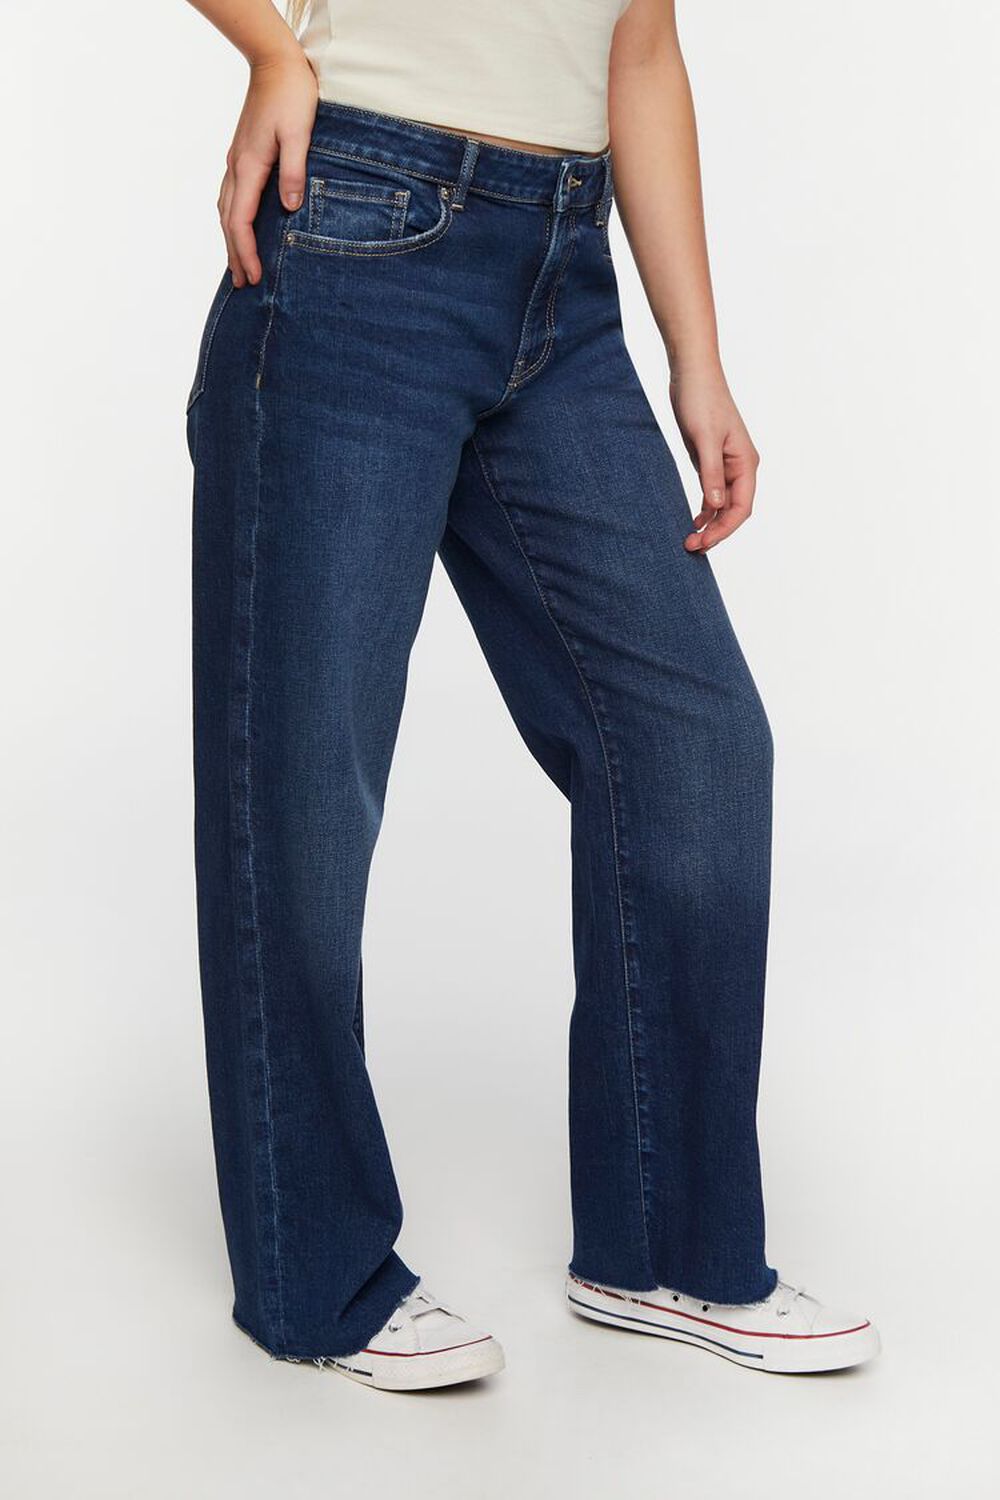 DARK DENIM 90s-Fit Low-Rise Jeans, image 2